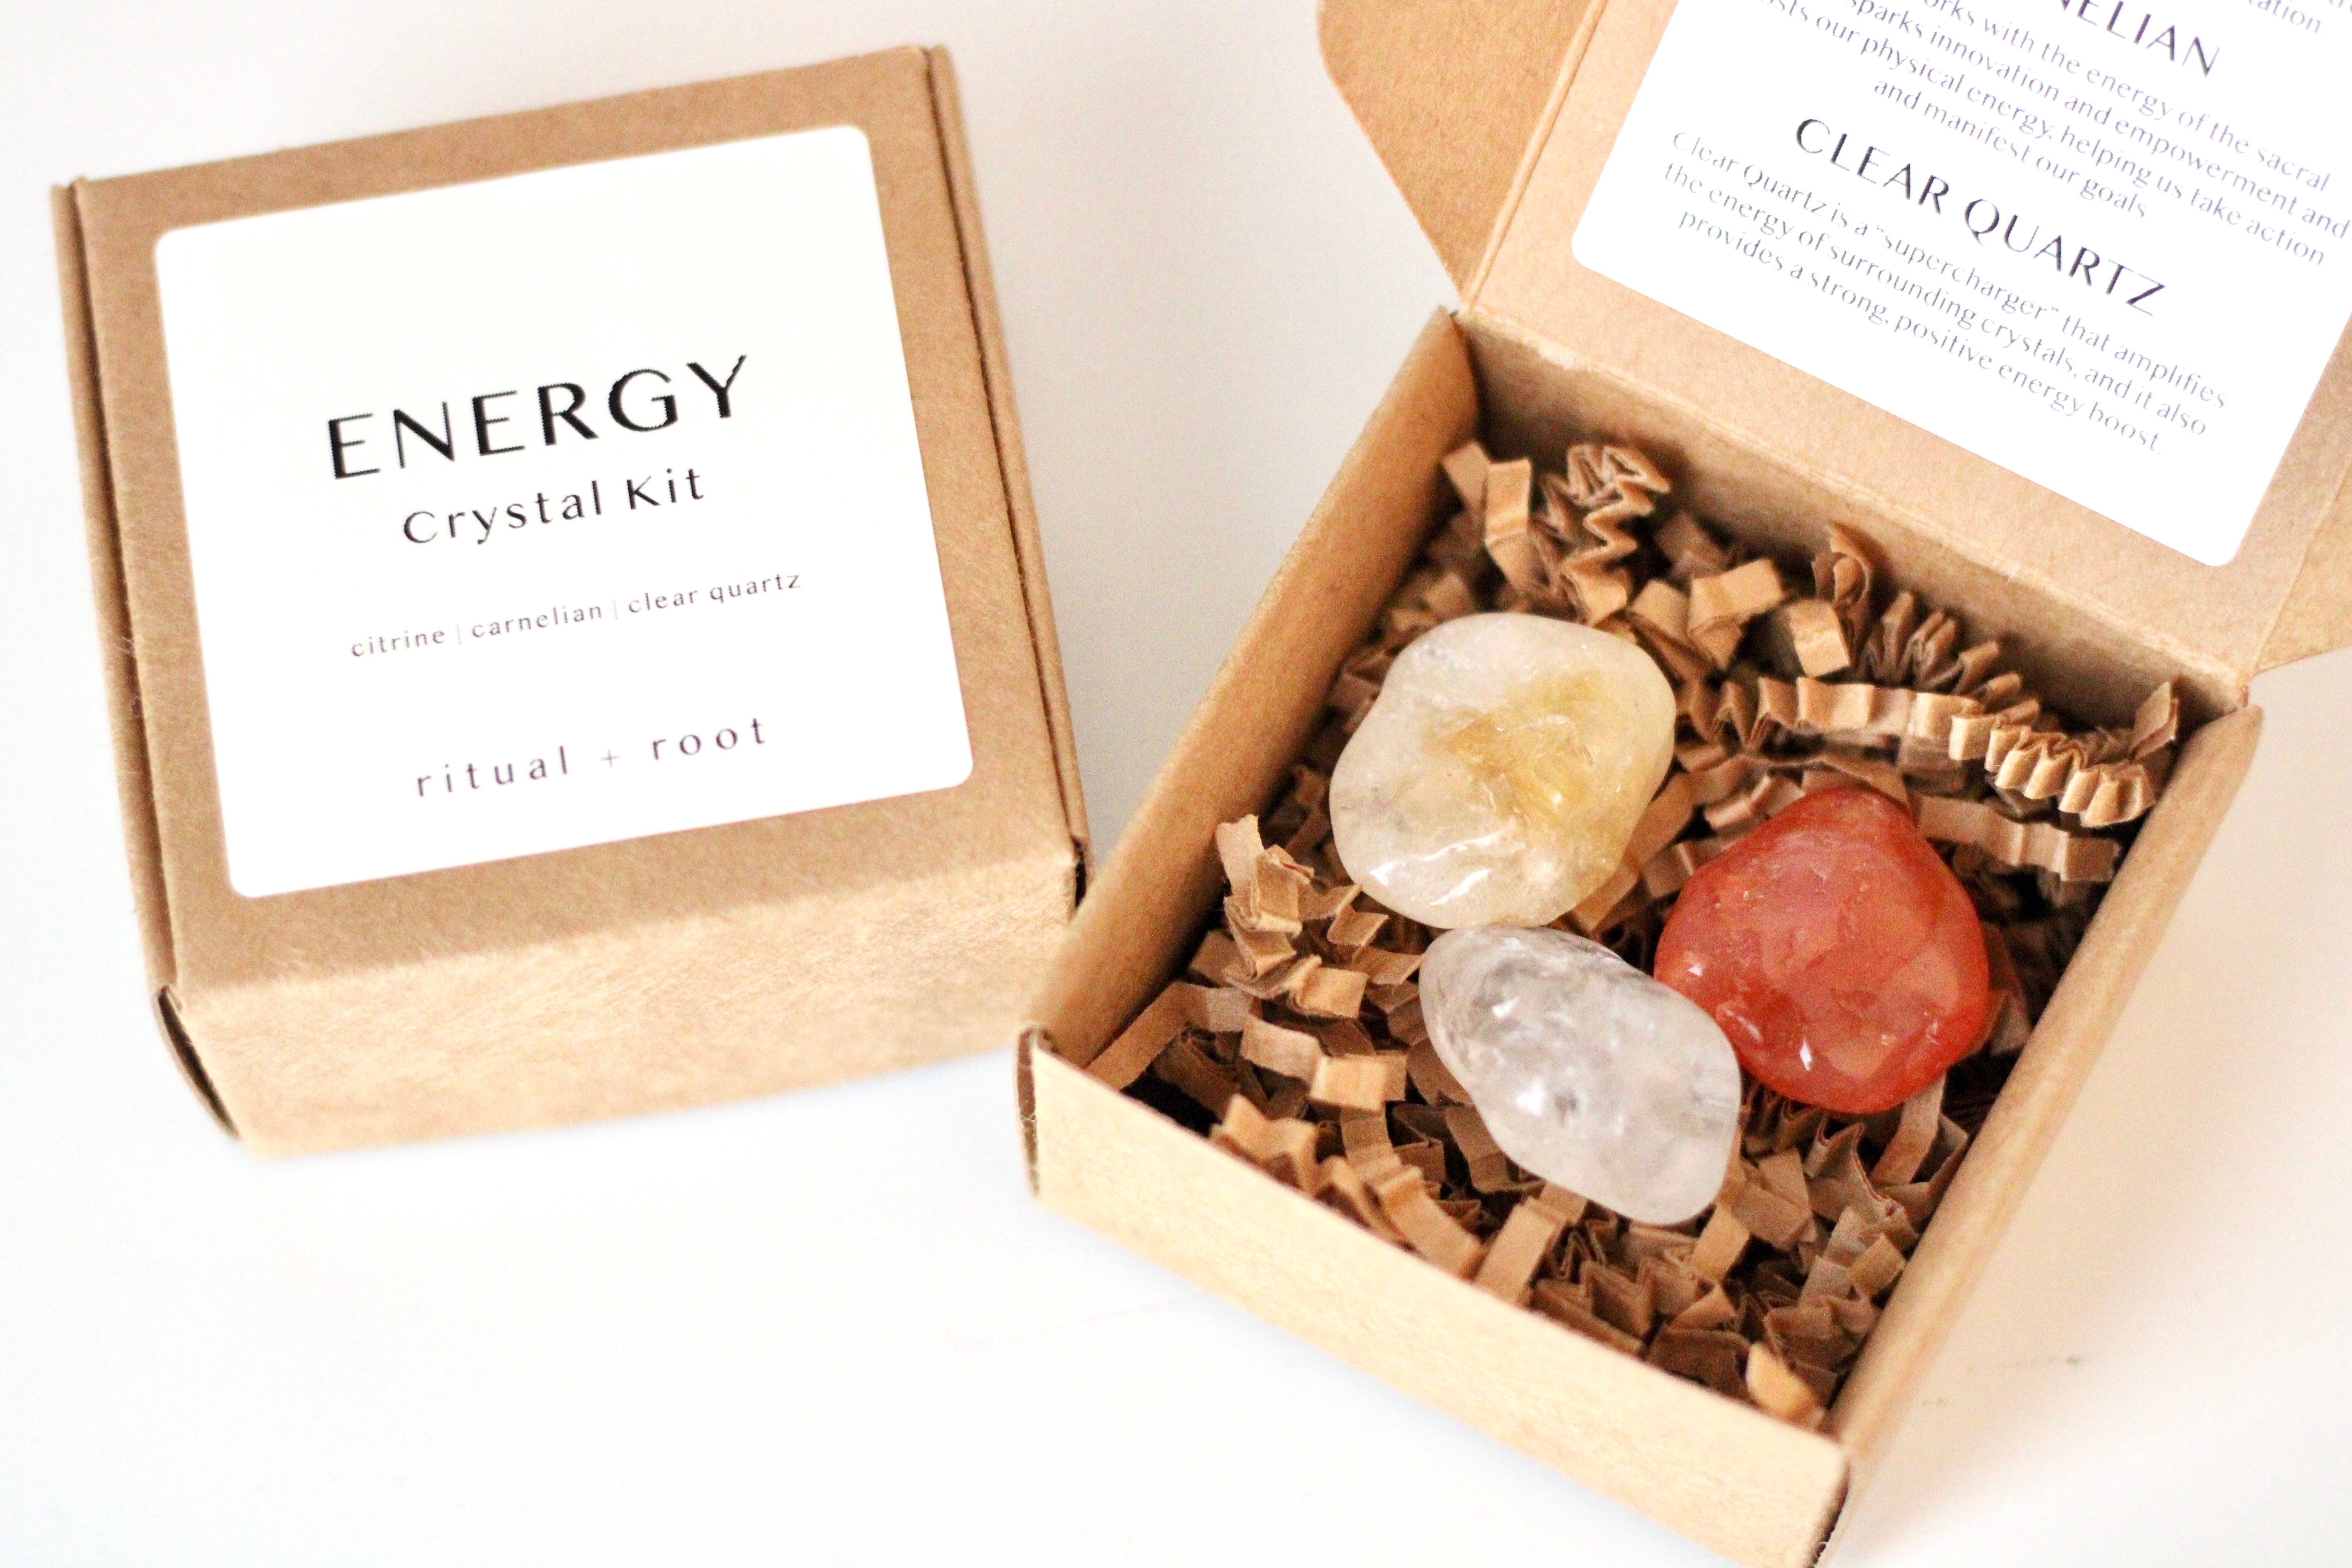 ENERGY Crystal Kit